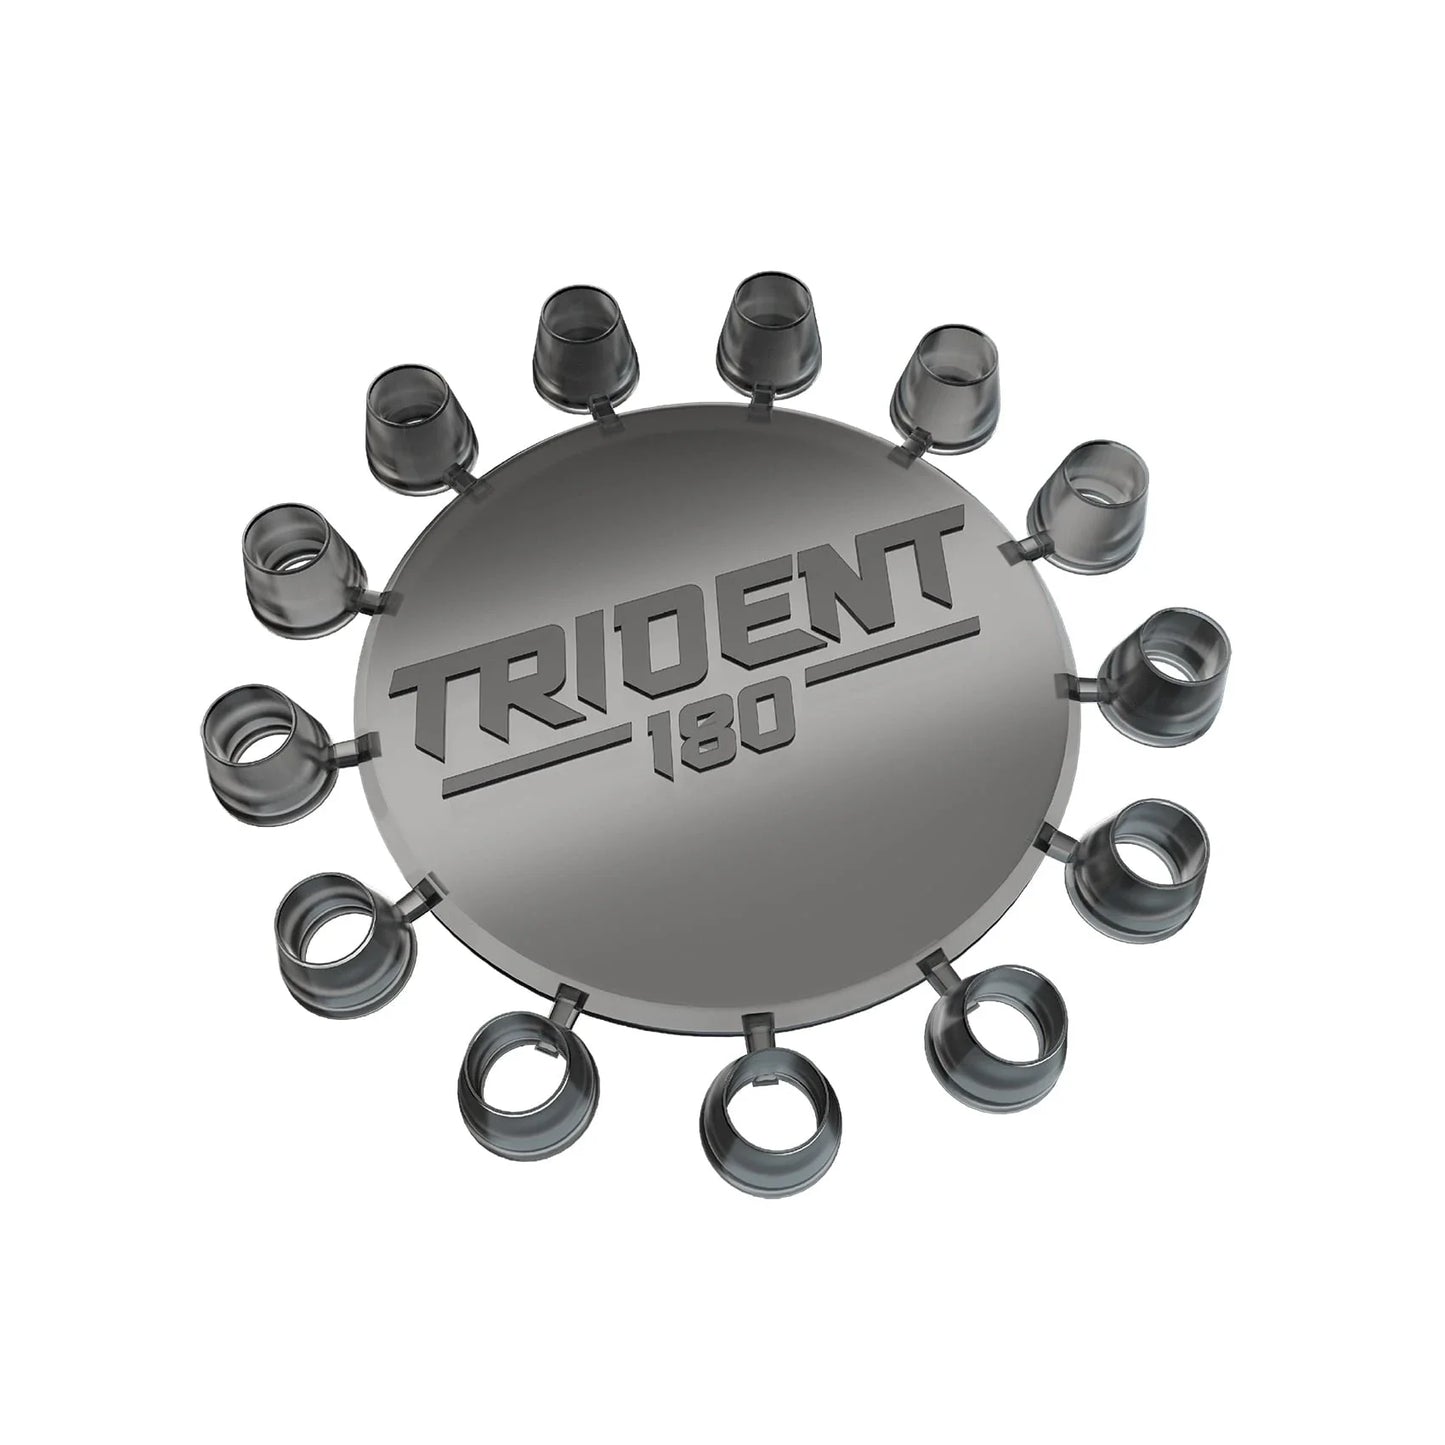 Trident 180 Silver Dart Point Caps